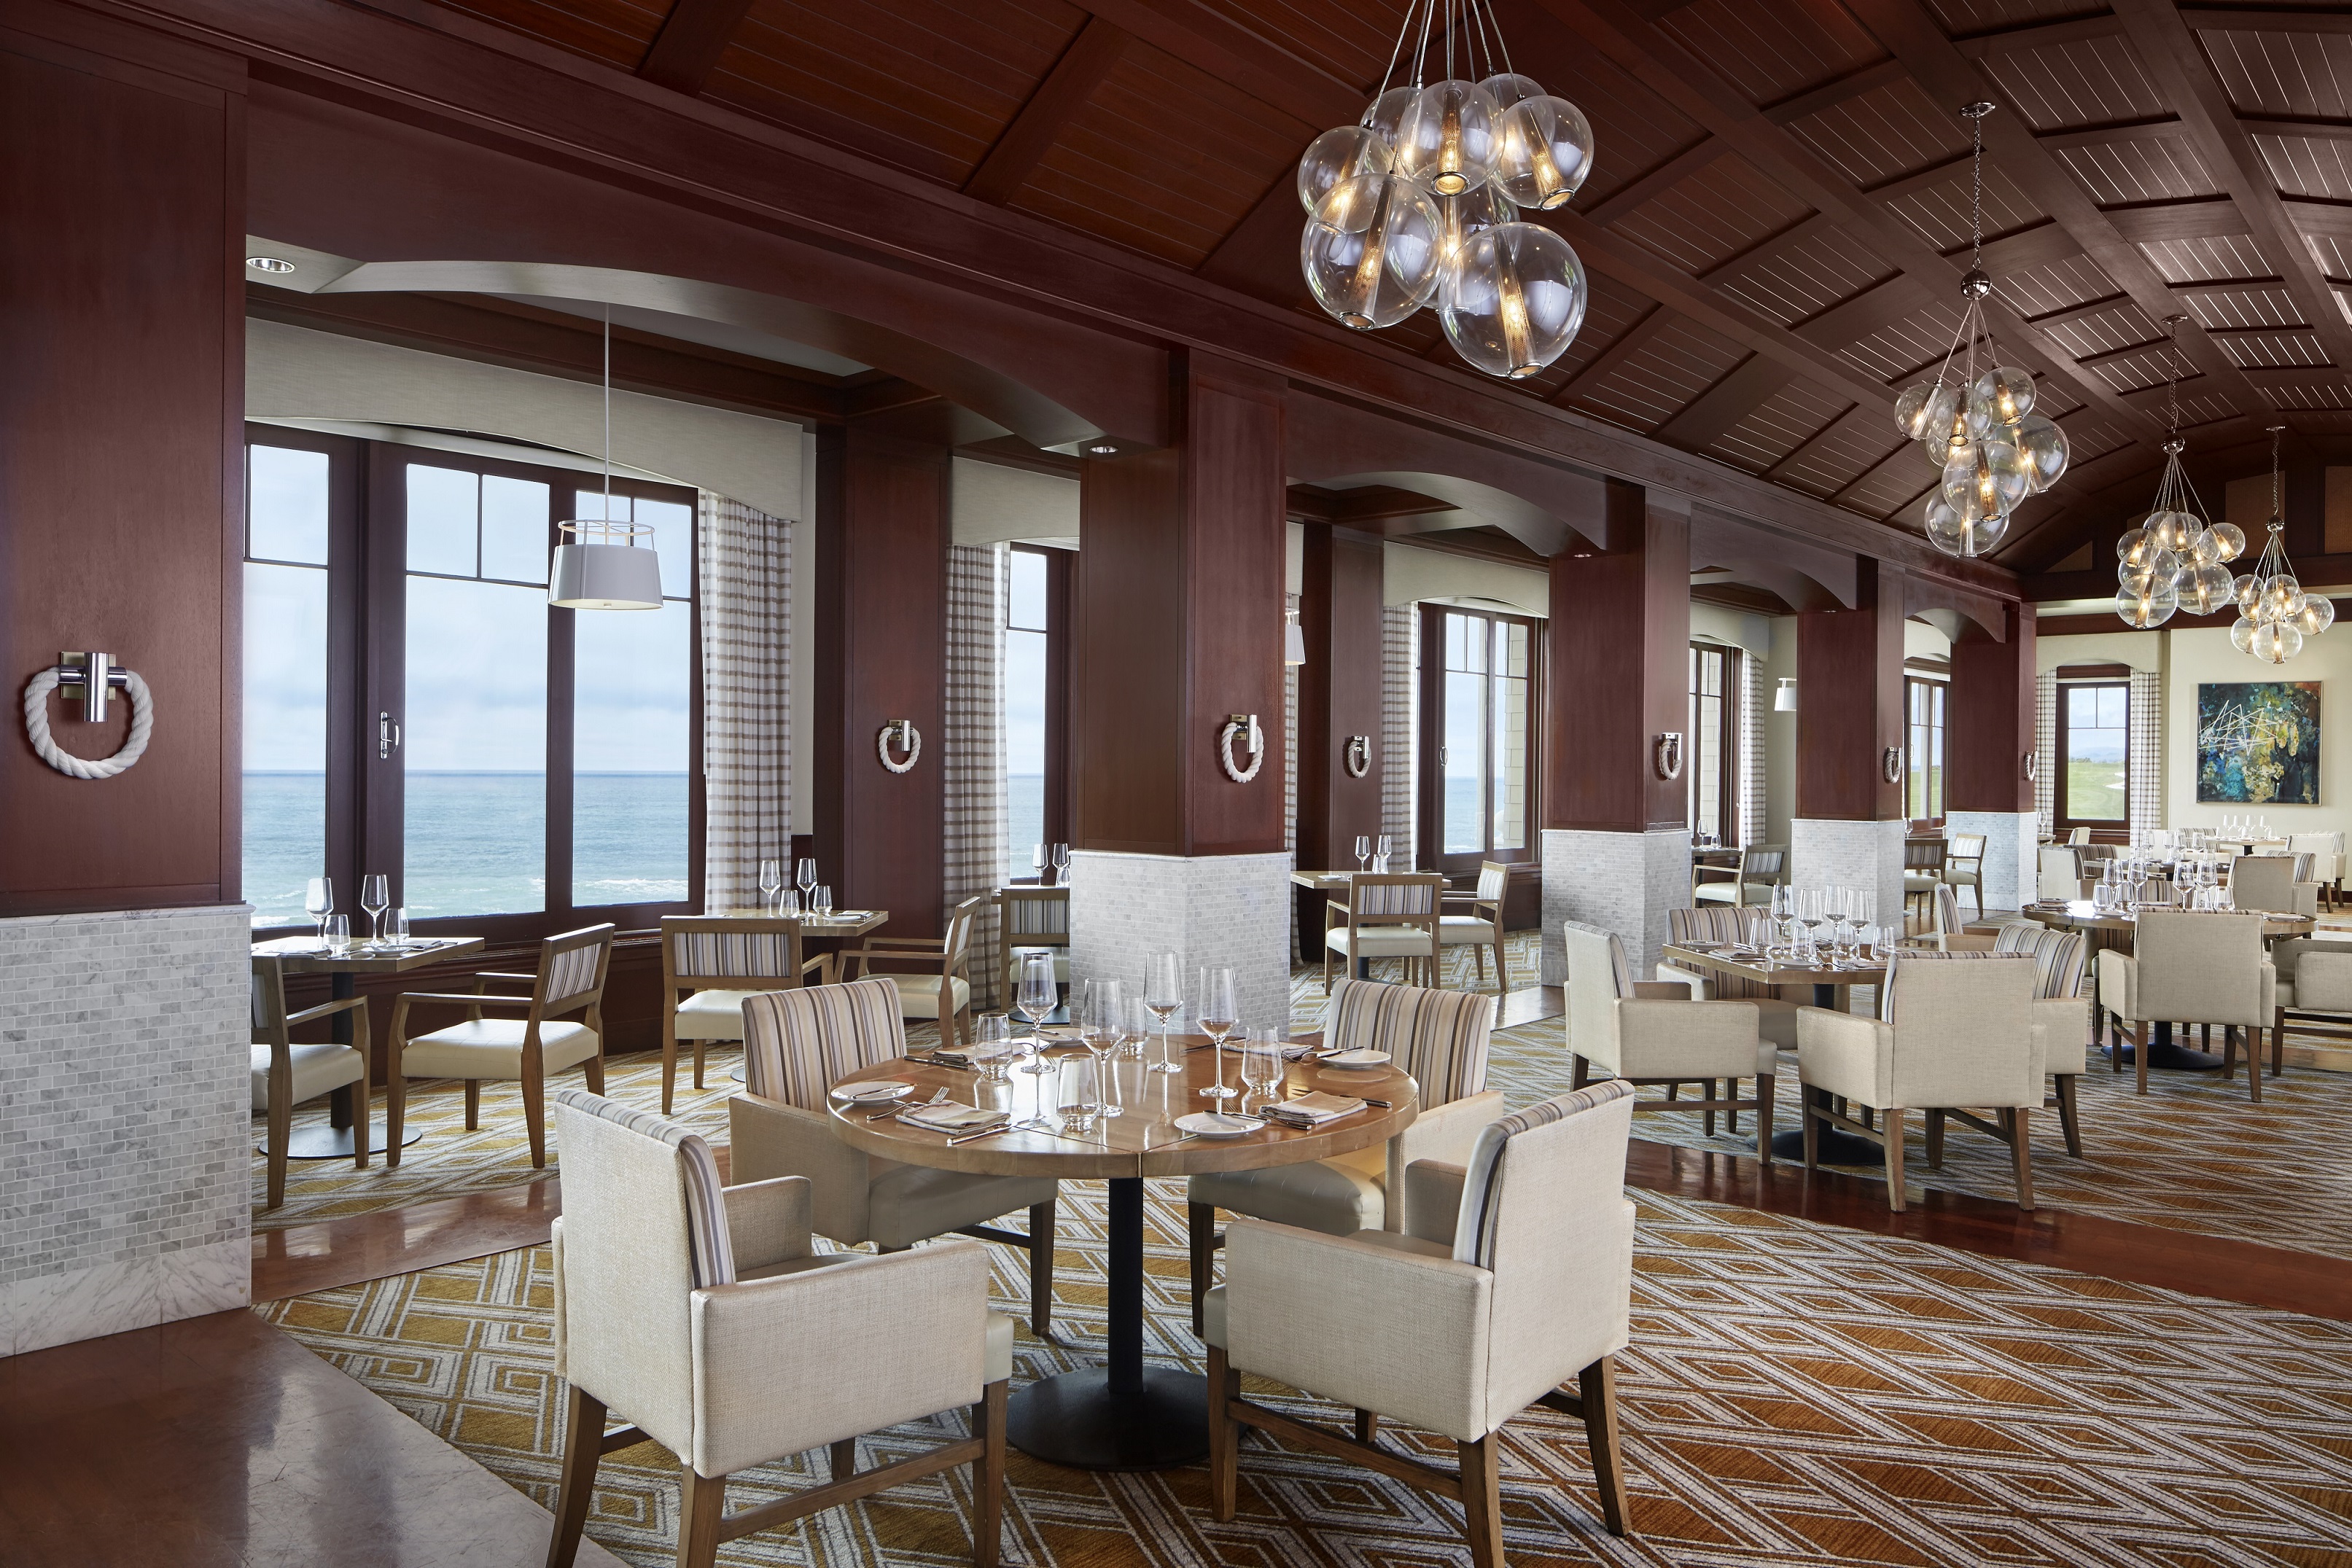 Award-winning Navio serves ocean cuisine overlooking the Pacific Ocean.